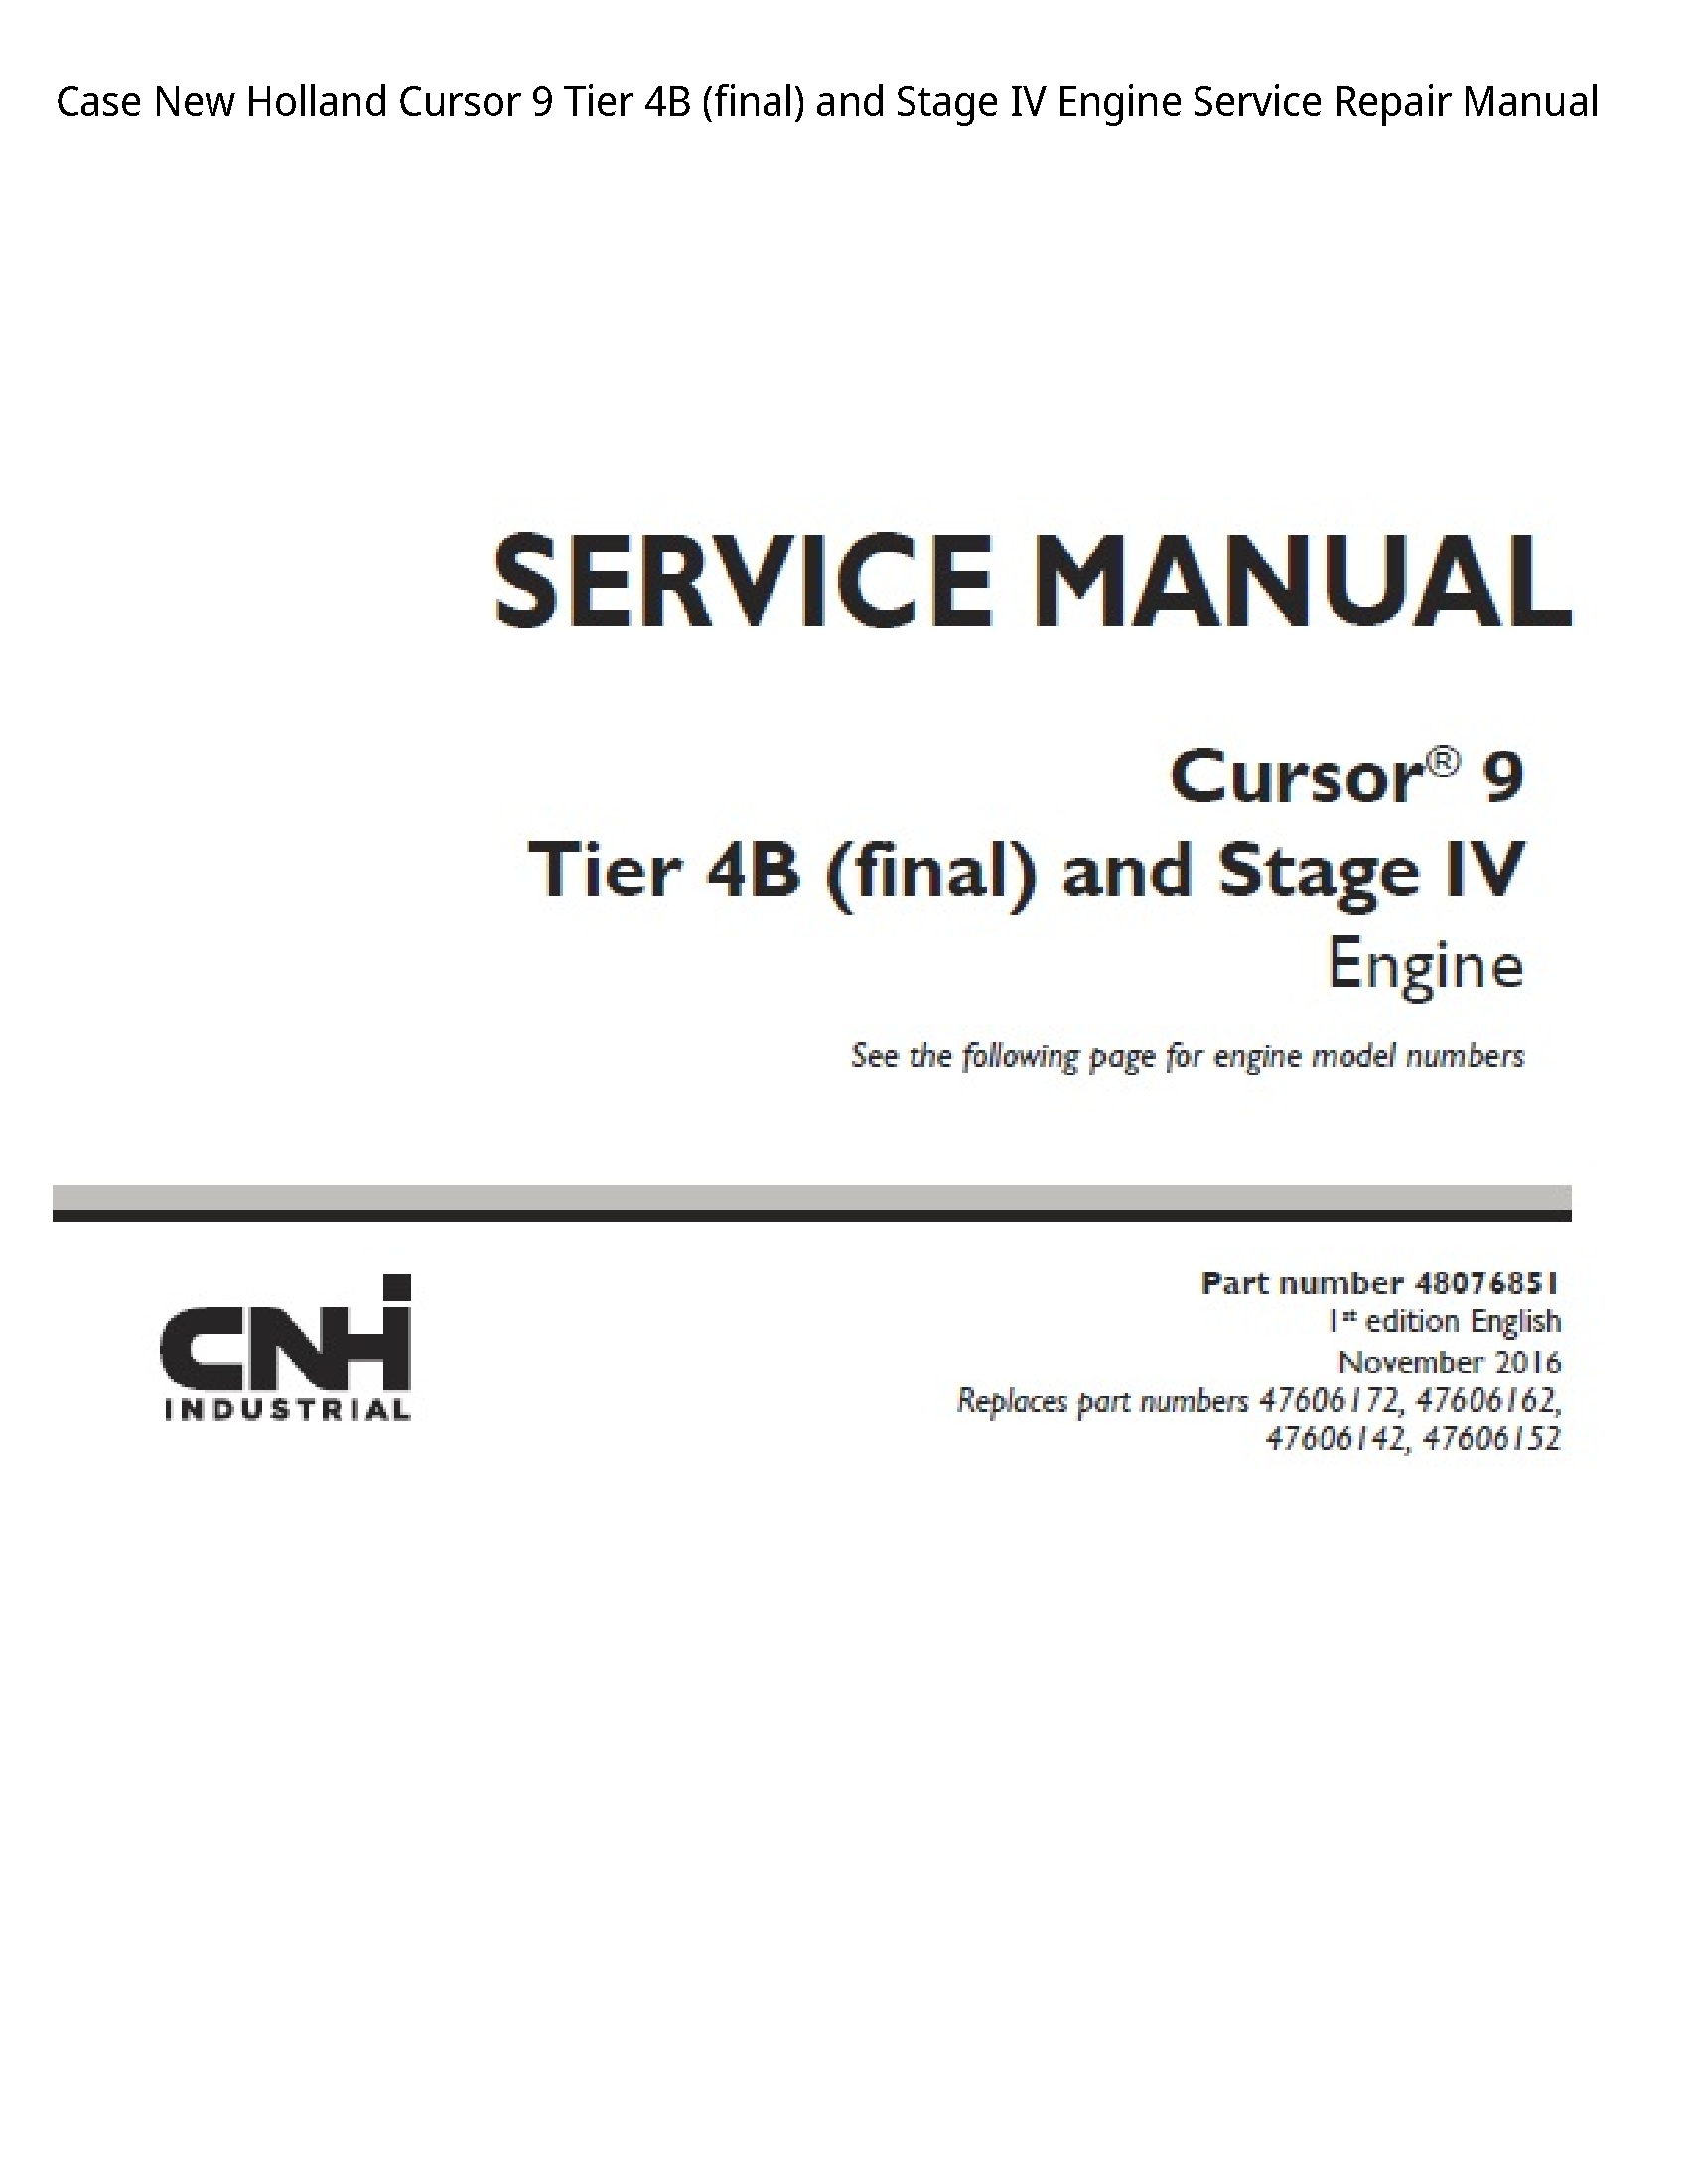 Case/Case IH 9 New Holland Cursor Tier (final)  Stage IV Engine manual